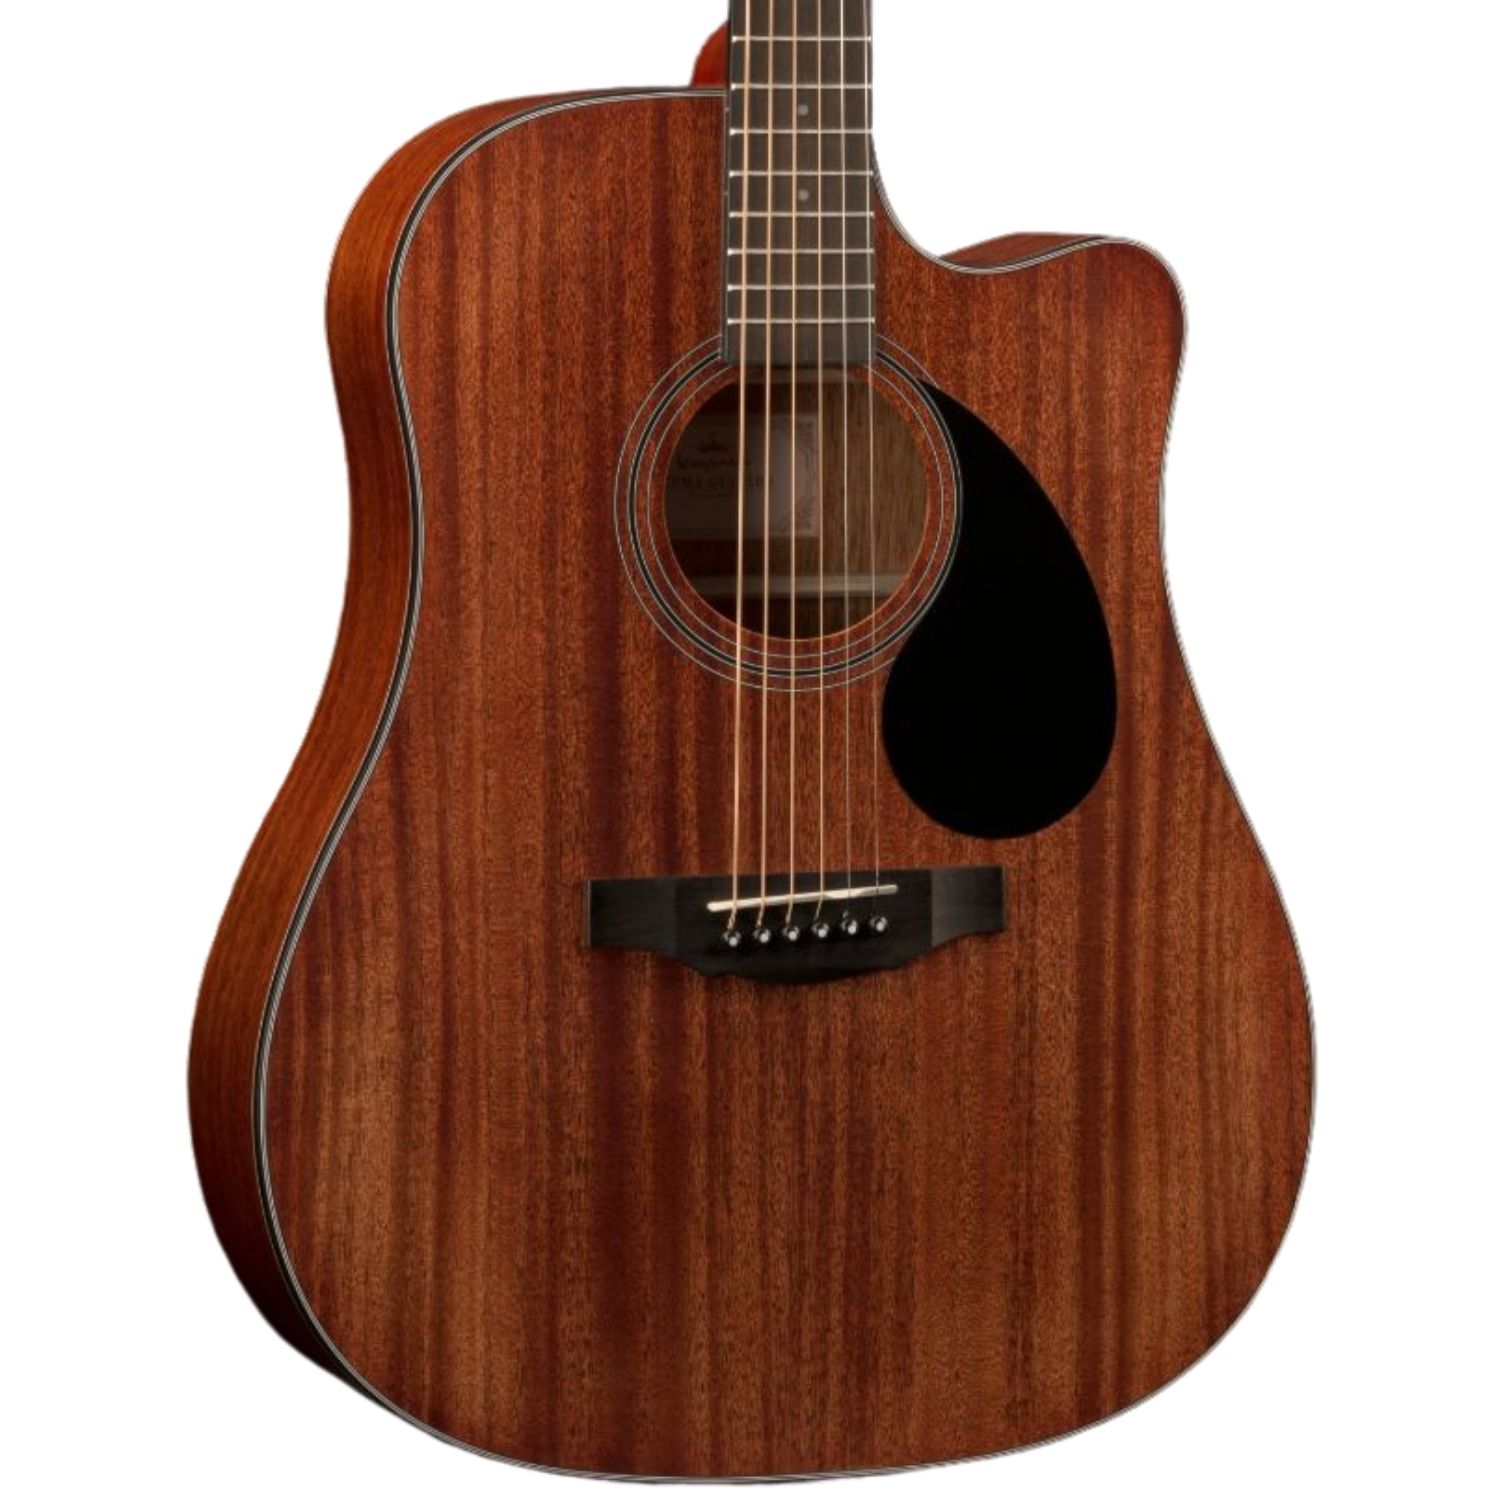 Kepma EDC dreadnought all mahogany acoustic Guitar